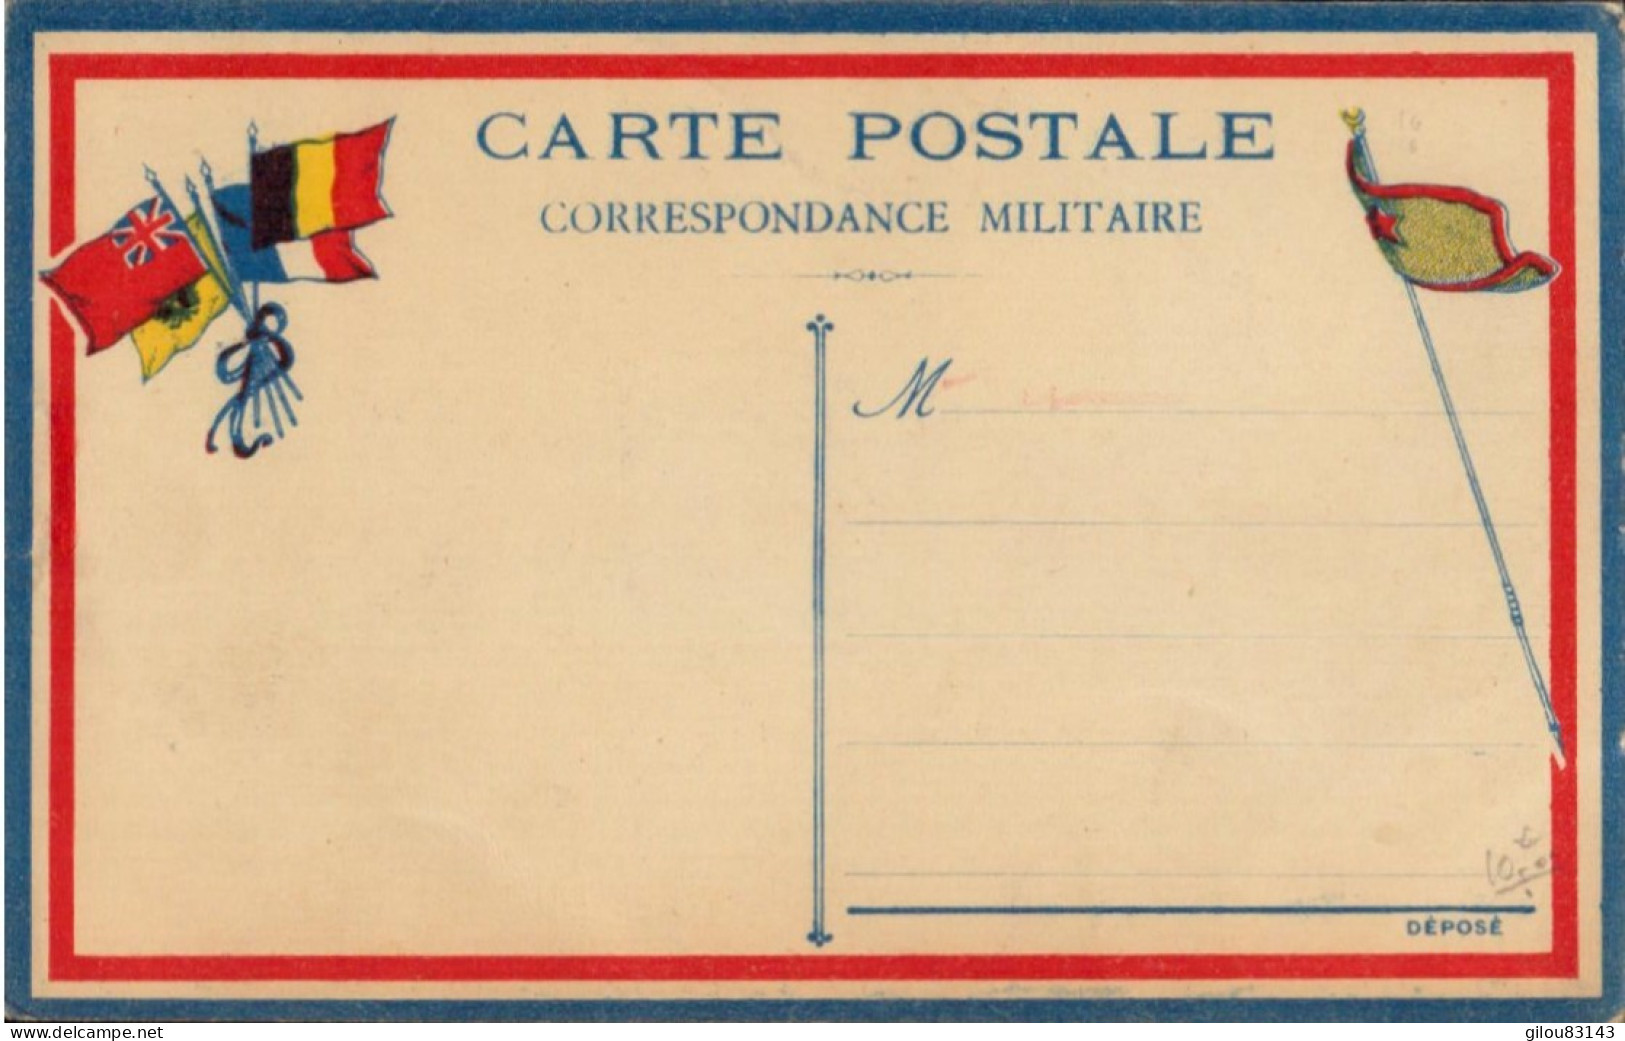 Carte En Correspondance Militaire, Jeune Marocain, Mouley Aomar Ben Hossein, 1911 - Sonstige & Ohne Zuordnung